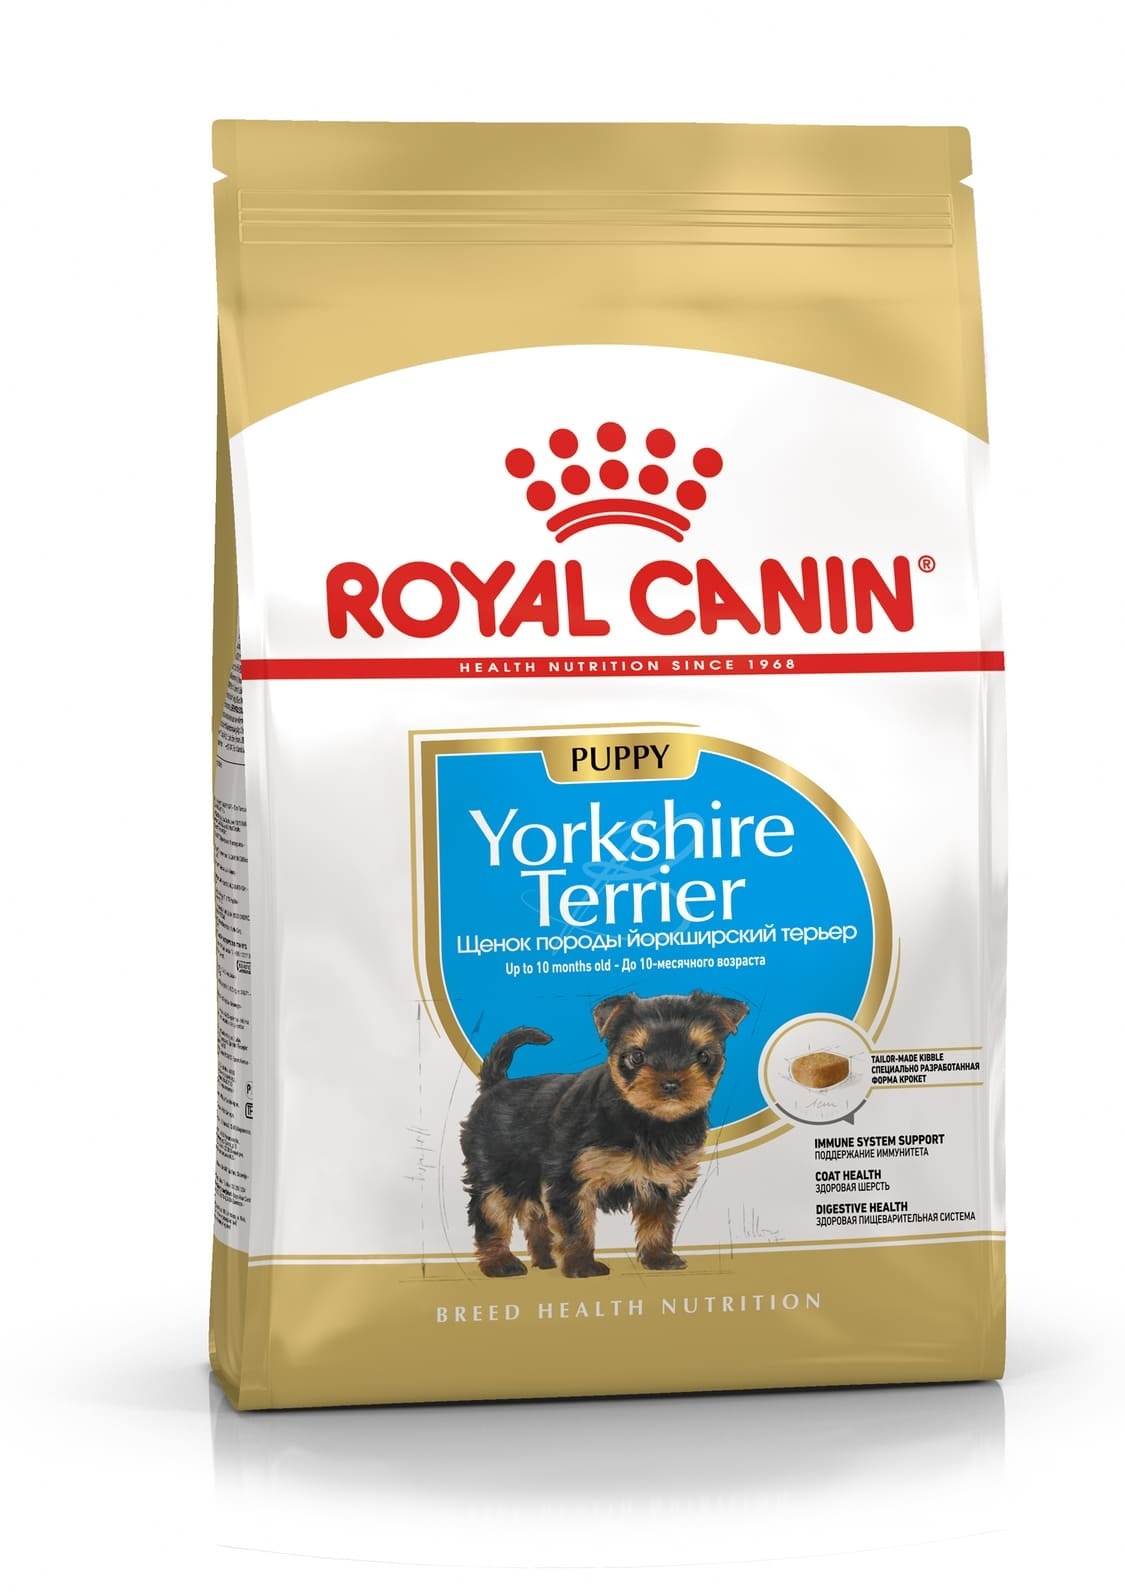 Royal Canin Корм Royal Canin для щенков йоркширского терьера до 10 месяцев (500 г) royal canin корм royal canin корм для йоркширского терьера с 10 месяцев 500 г